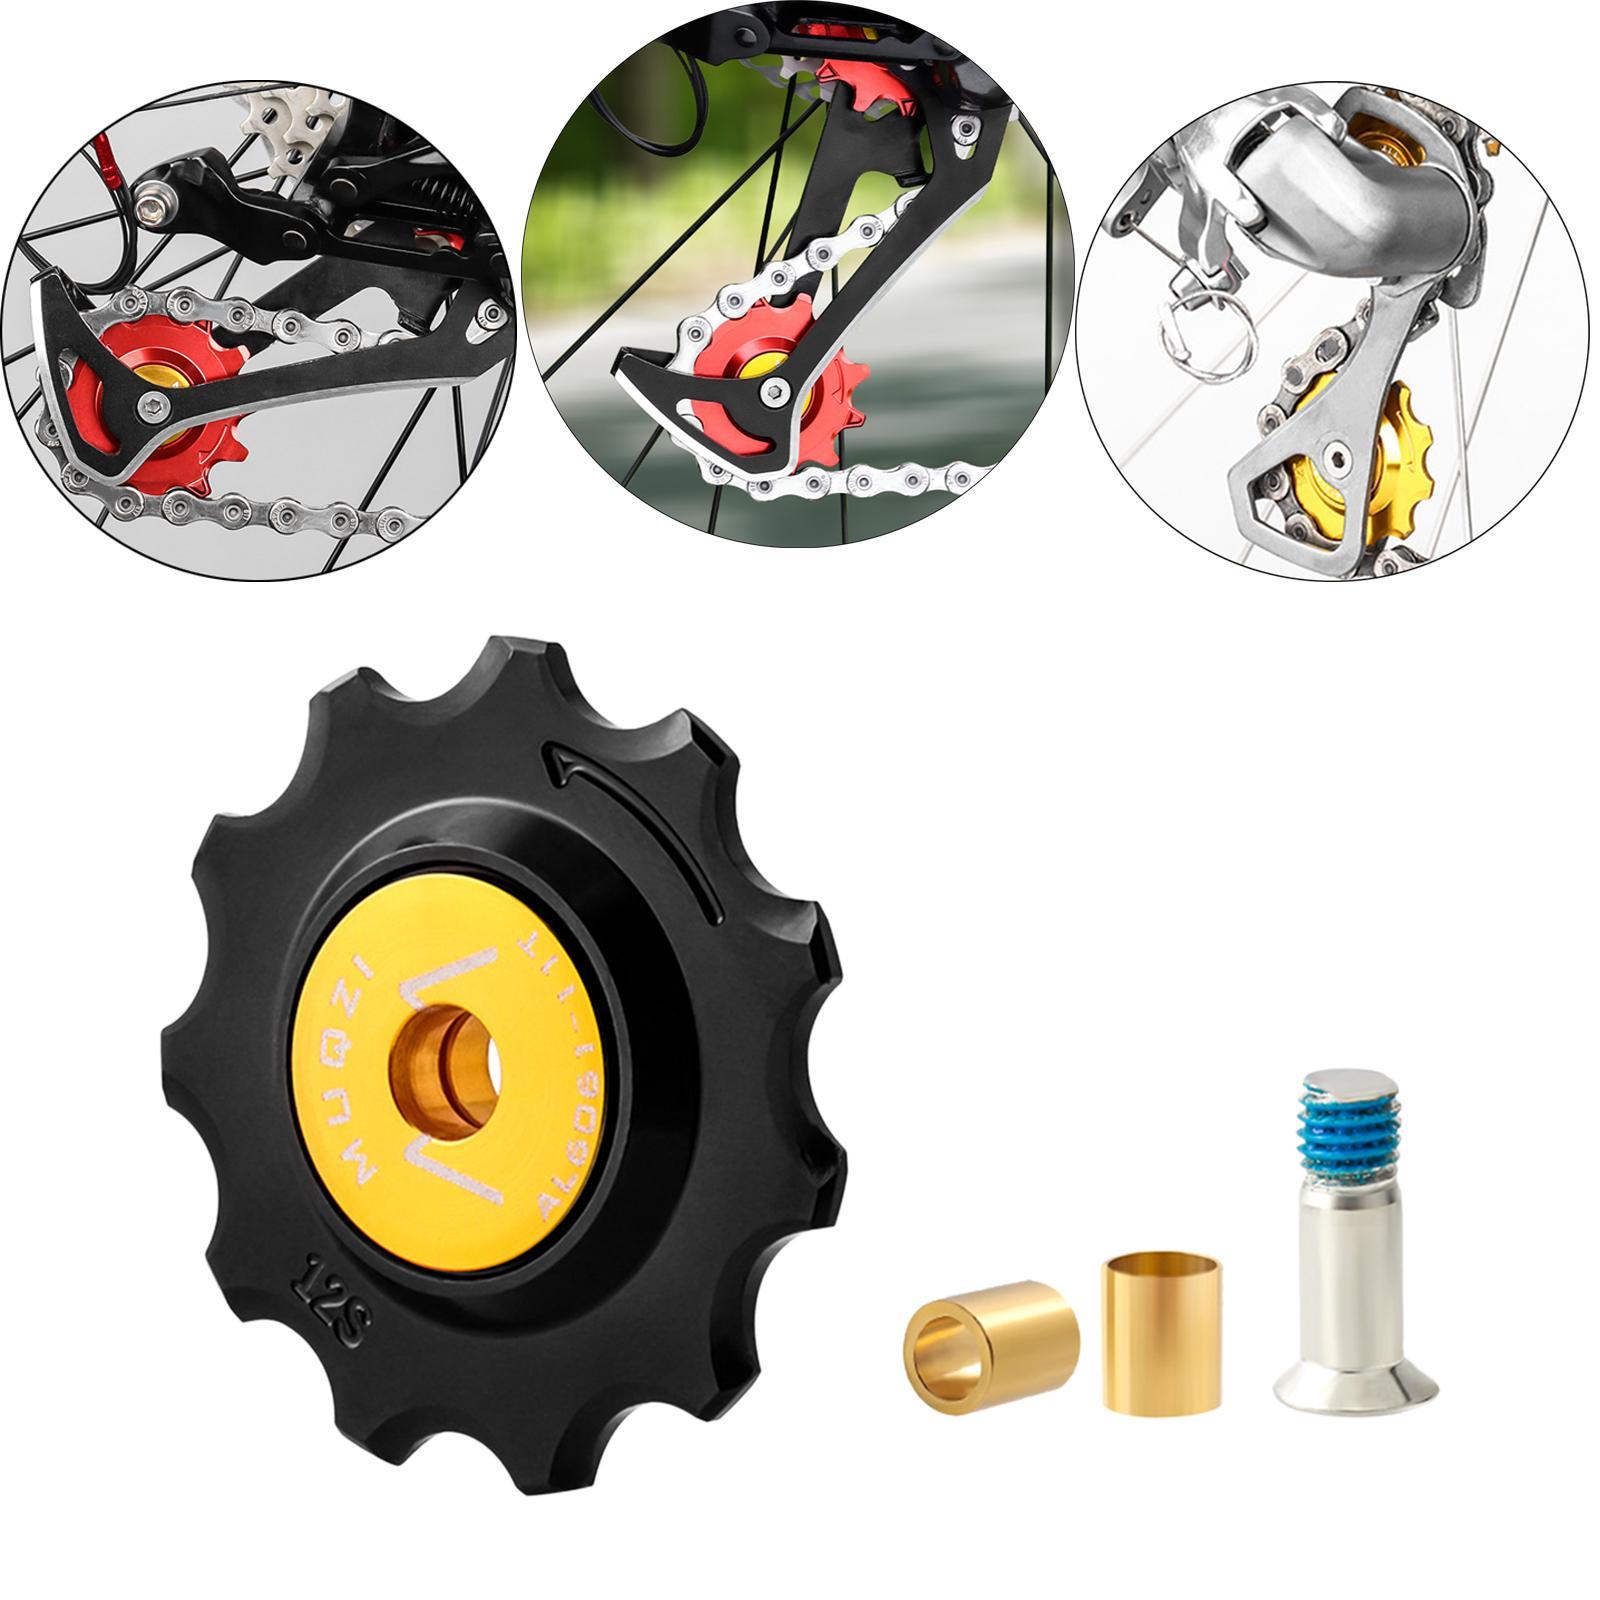 Rear Derailleur Pulley, Ceramic Bearing Jockey Wheel Pulley Aluminium Alloy Roller for Road Mountain Bike